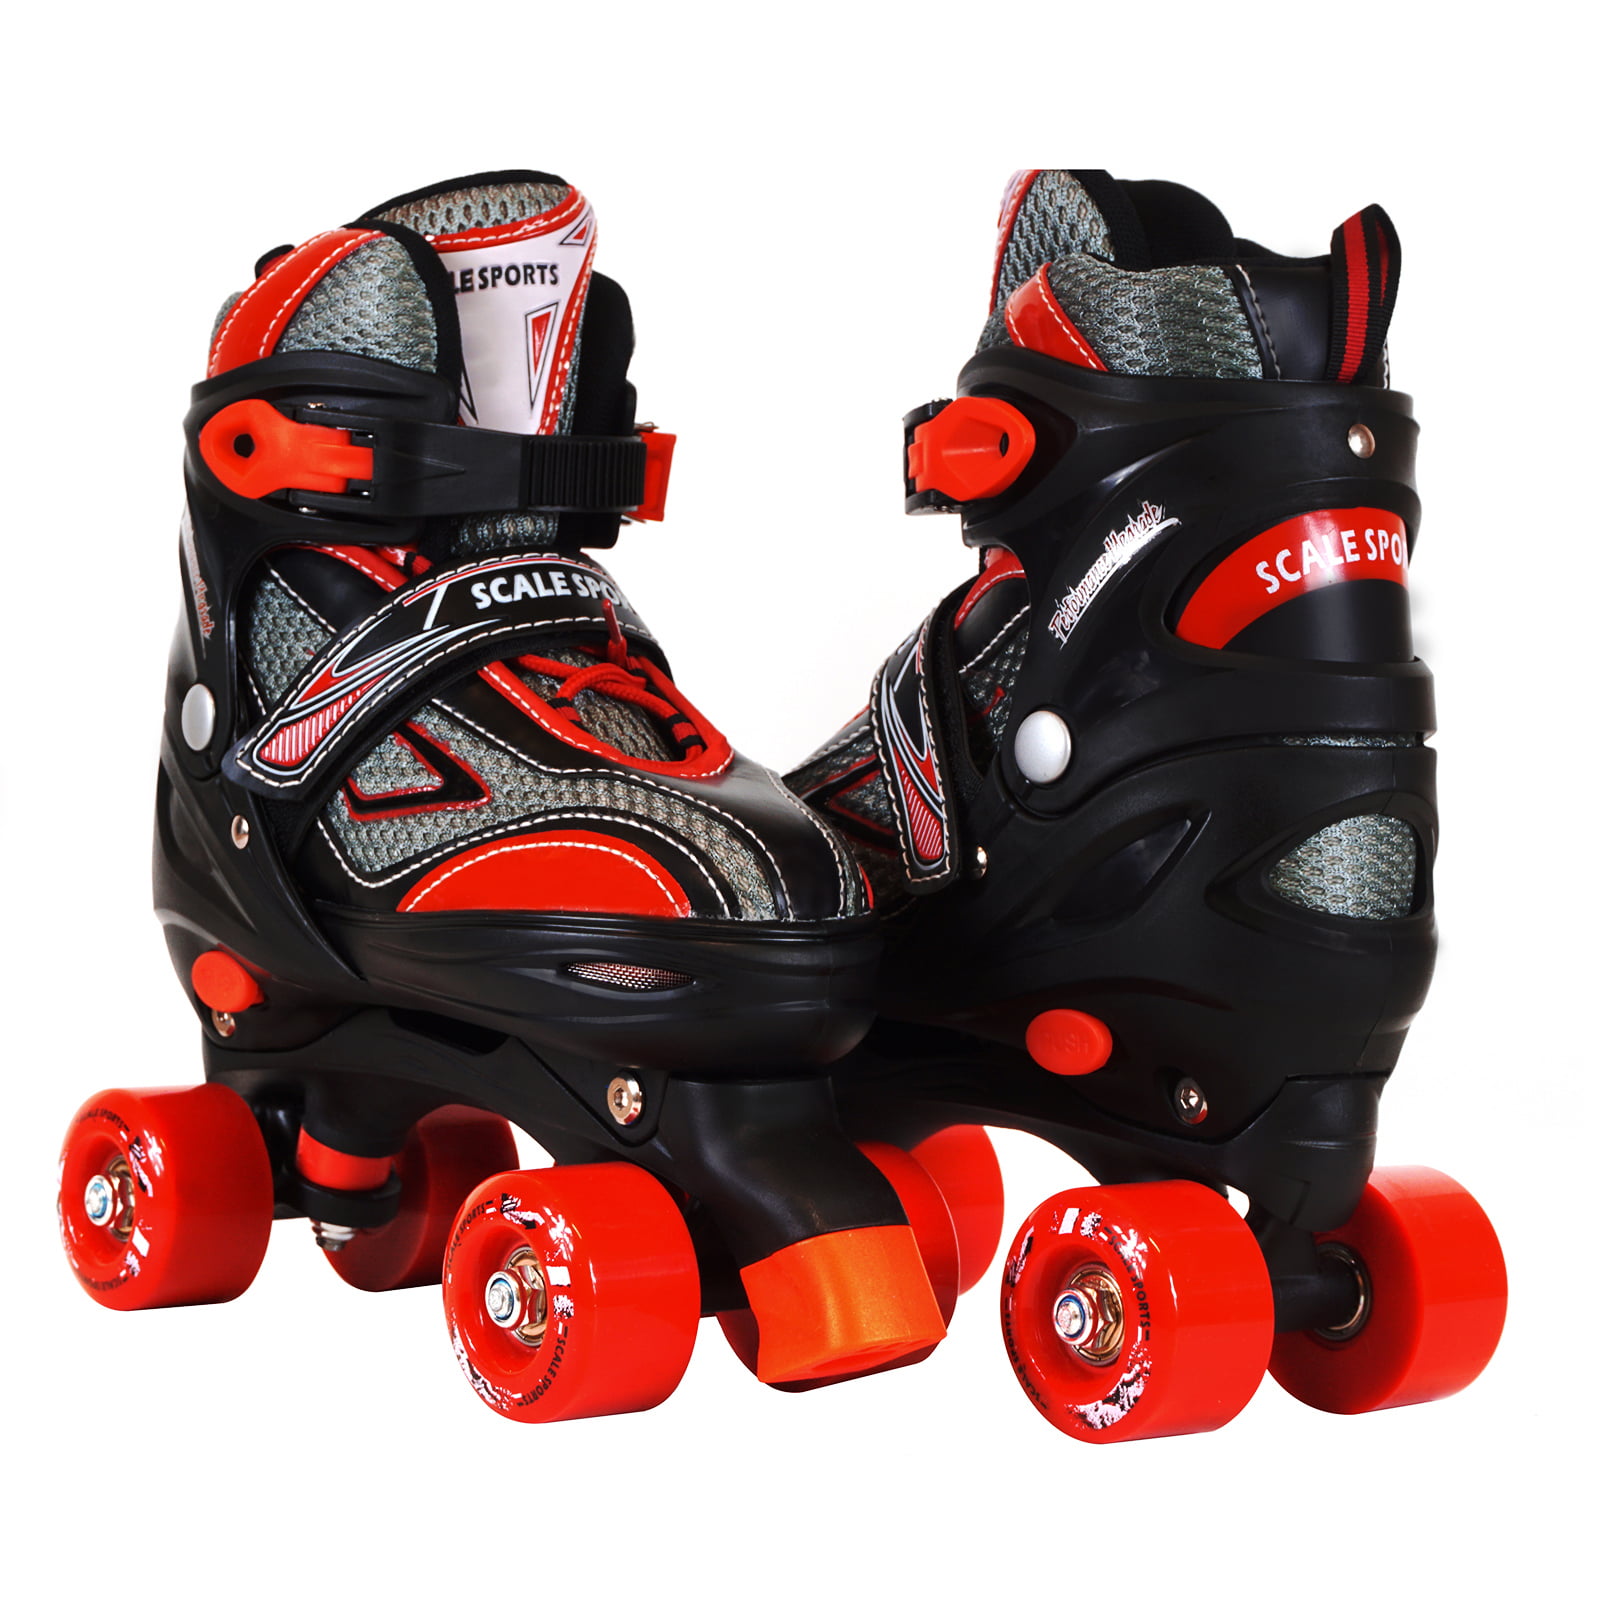 b/w Roller Skates Adjustable Size for Kids/Adult 4Wheels Children Boys Girls 2in 